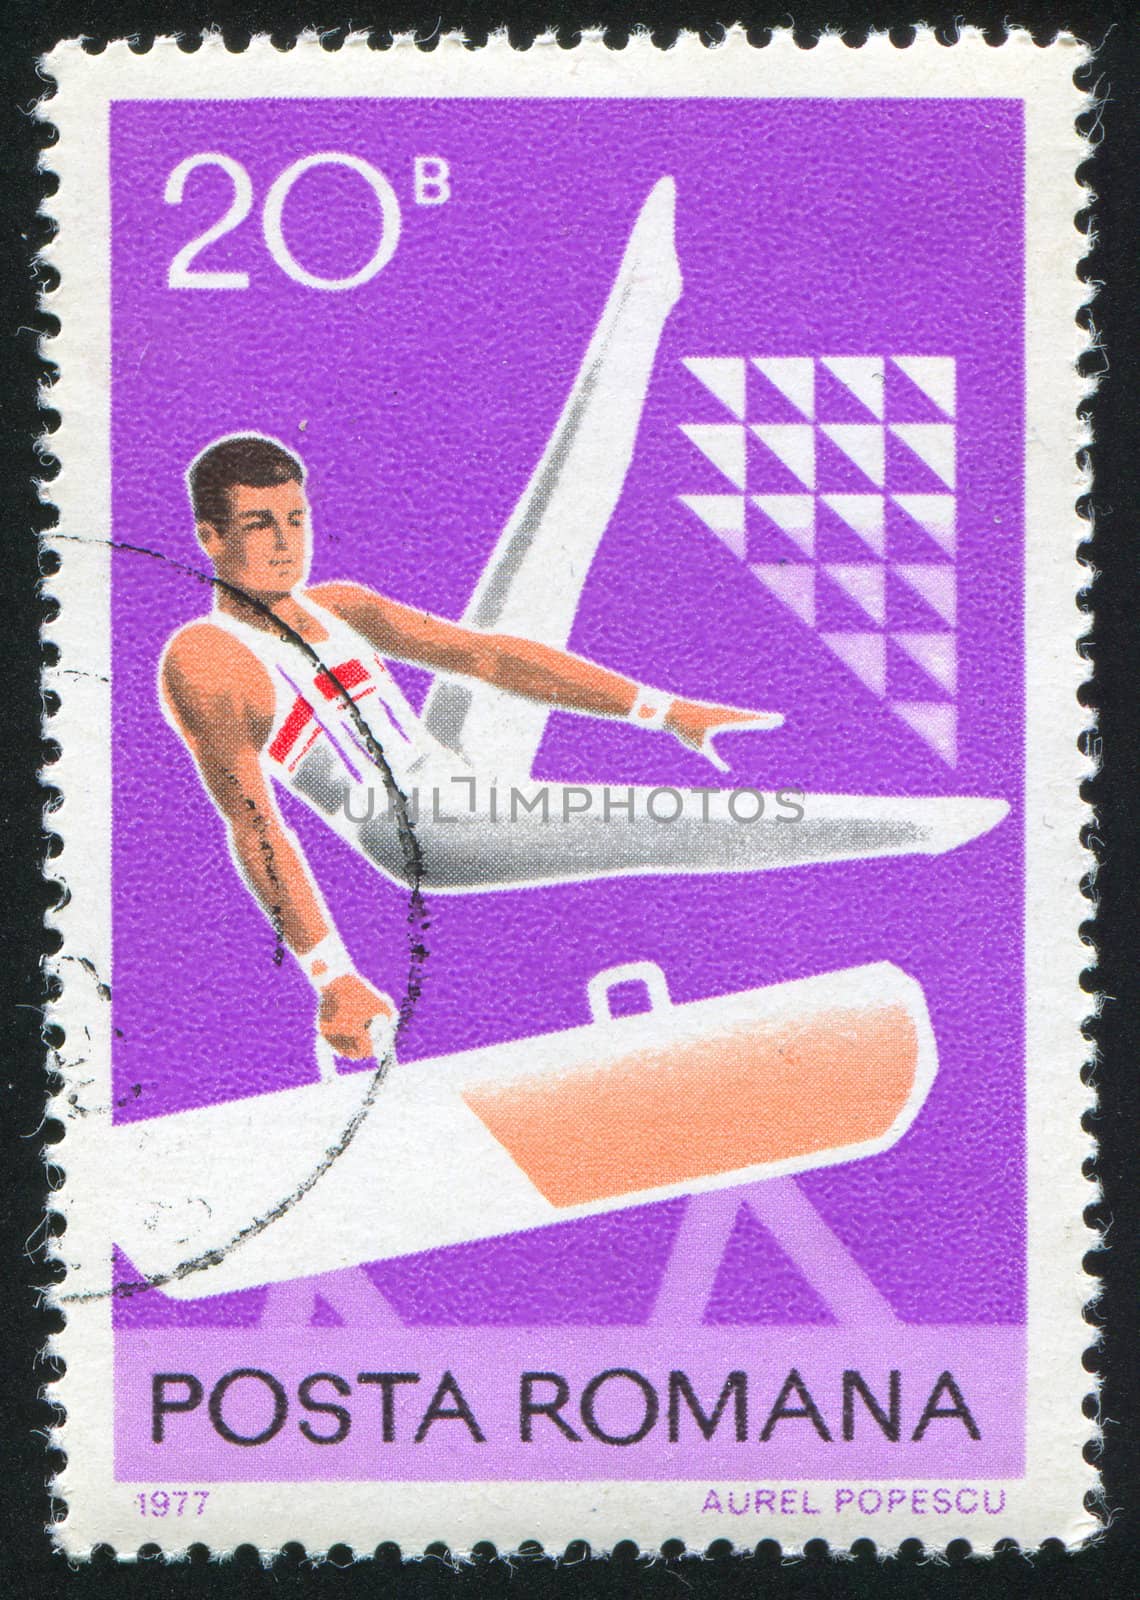 ROMANIA - CIRCA 1977: stamp printed by Romania, show gymnastics, circa 1977.